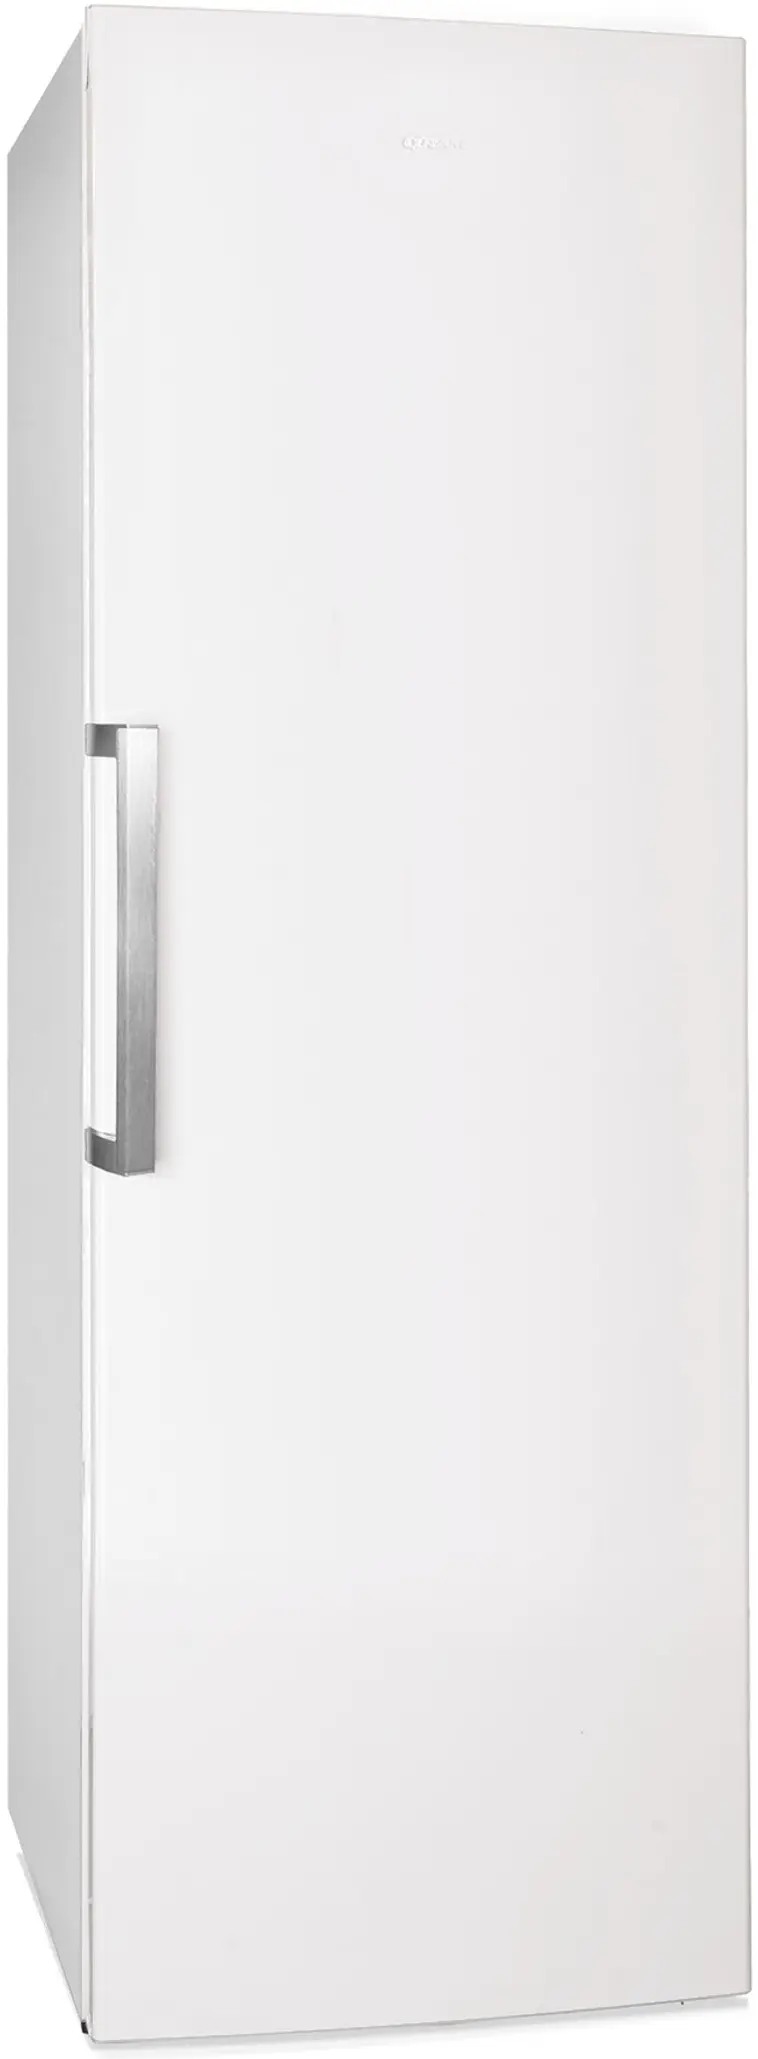 Gram jääkaappi KS 441862/1 valkoinen